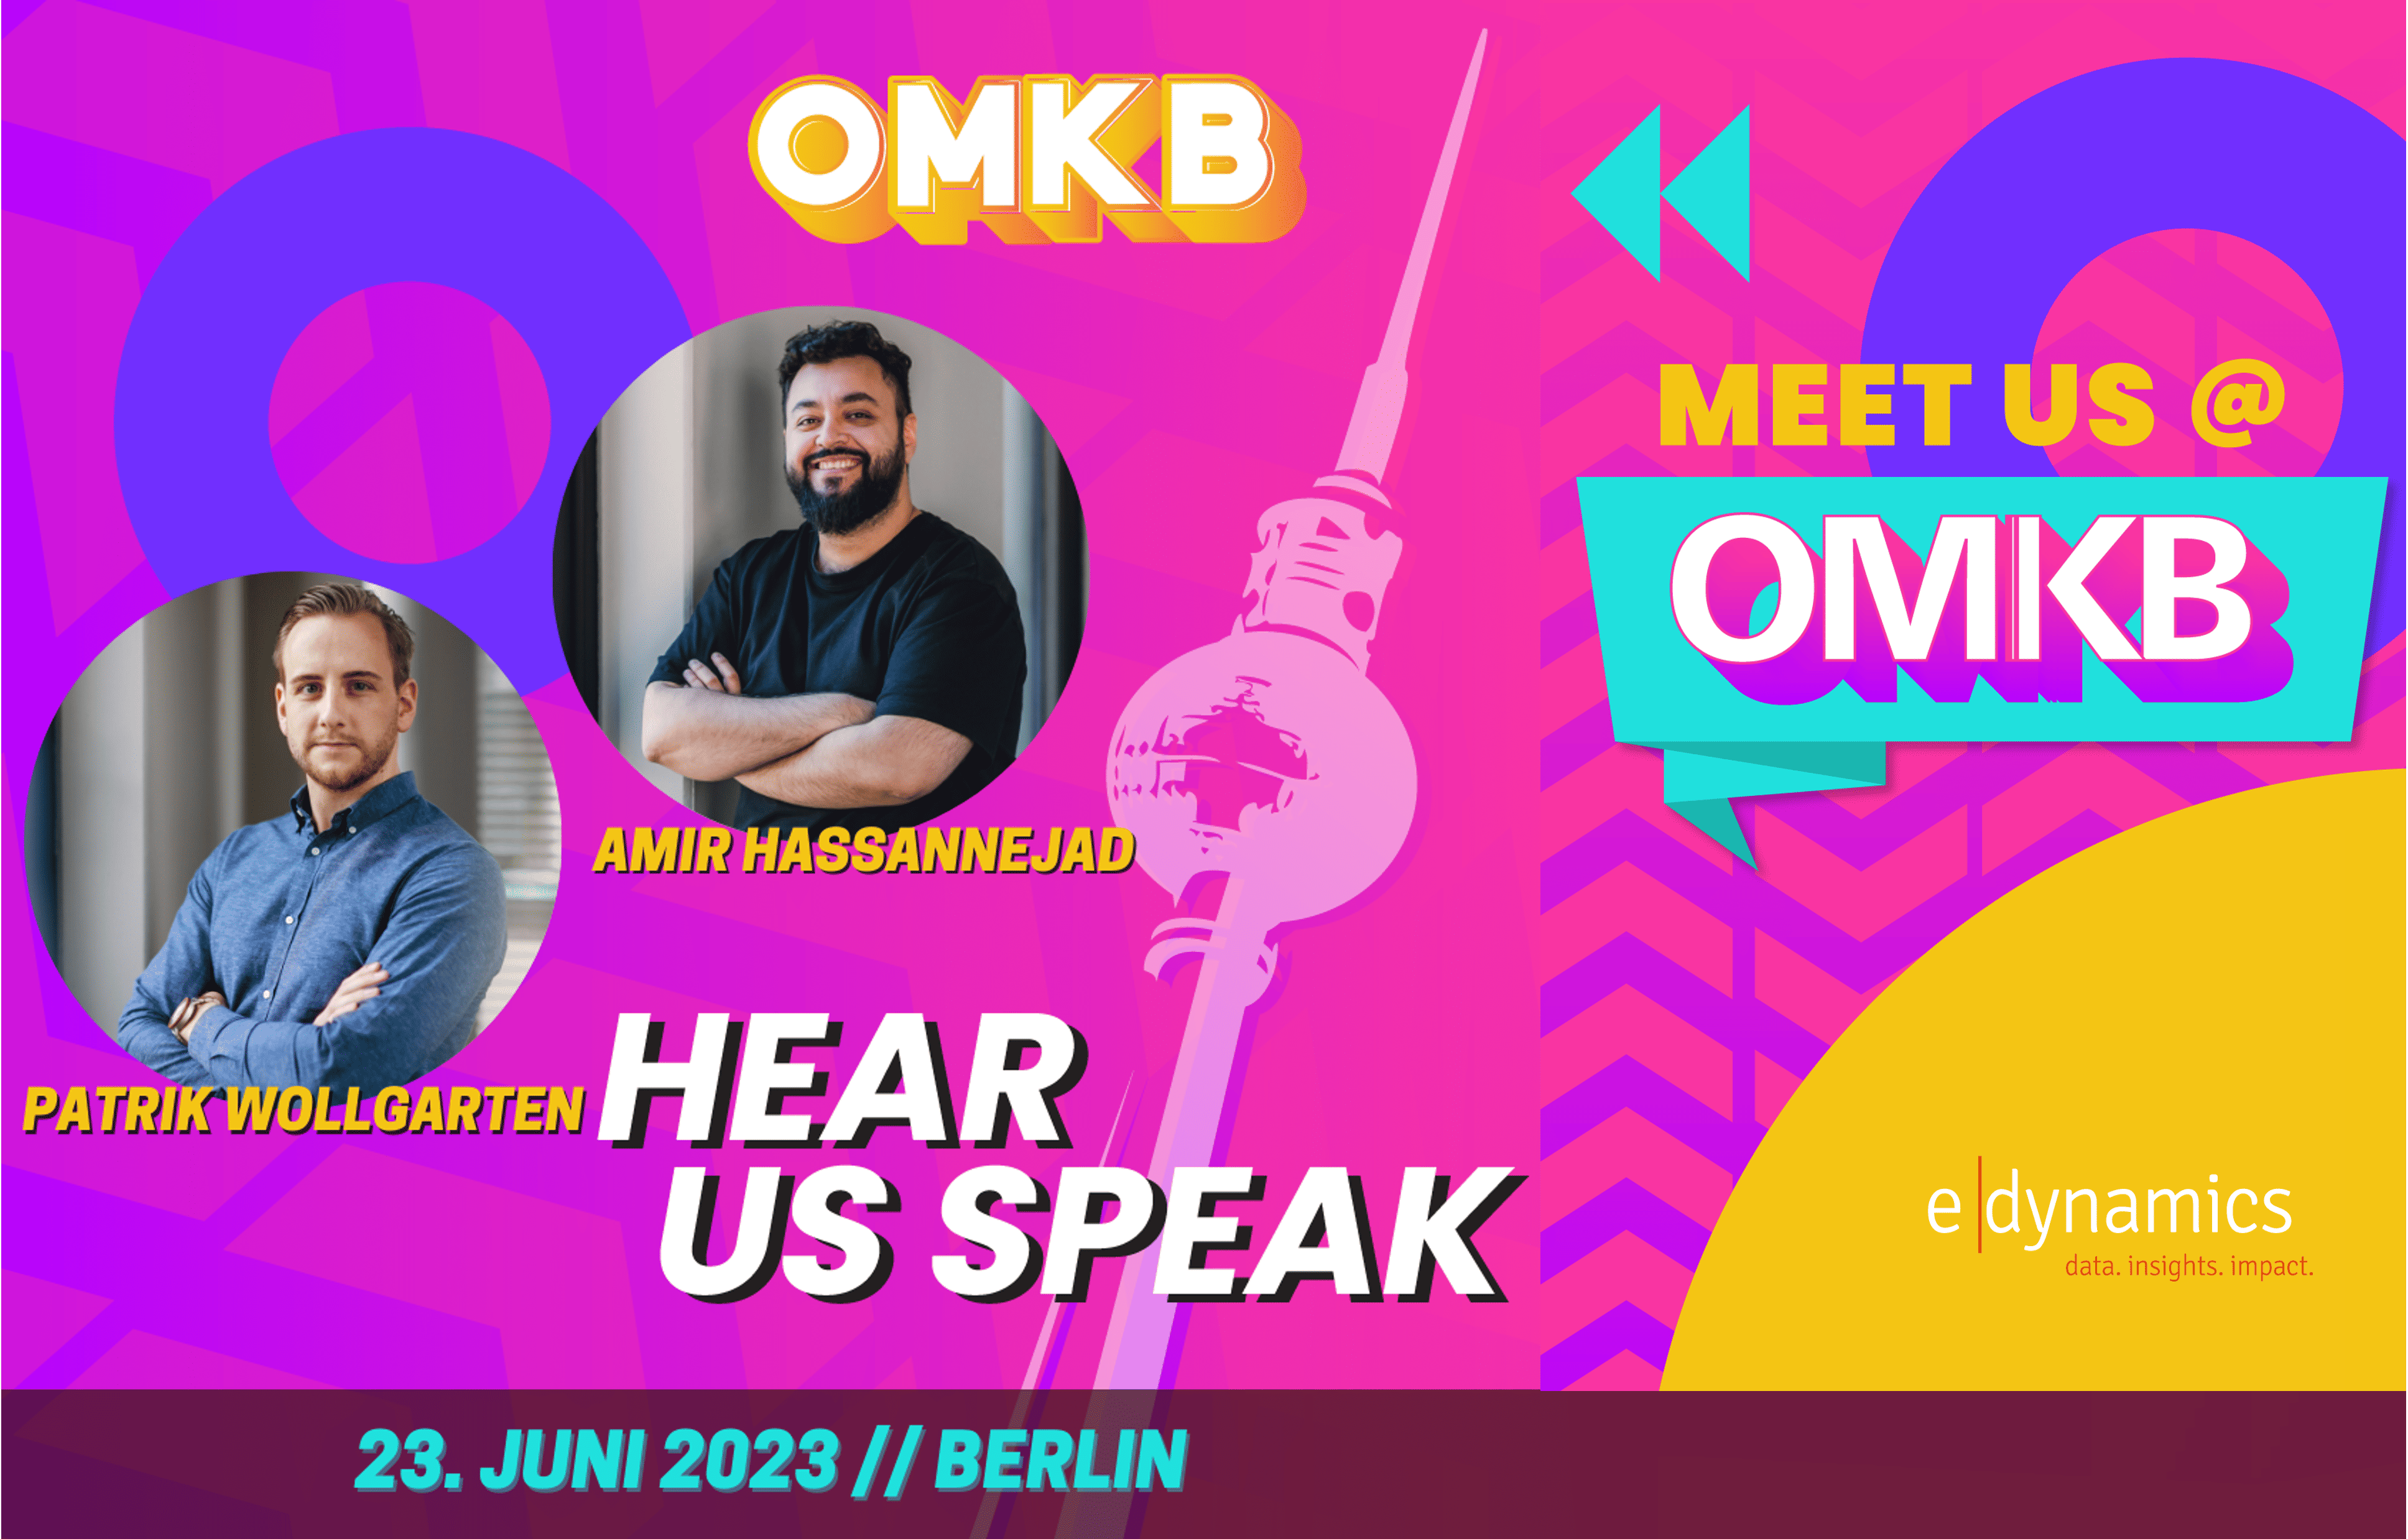 OMKB Berlin 2023 e-dynamics